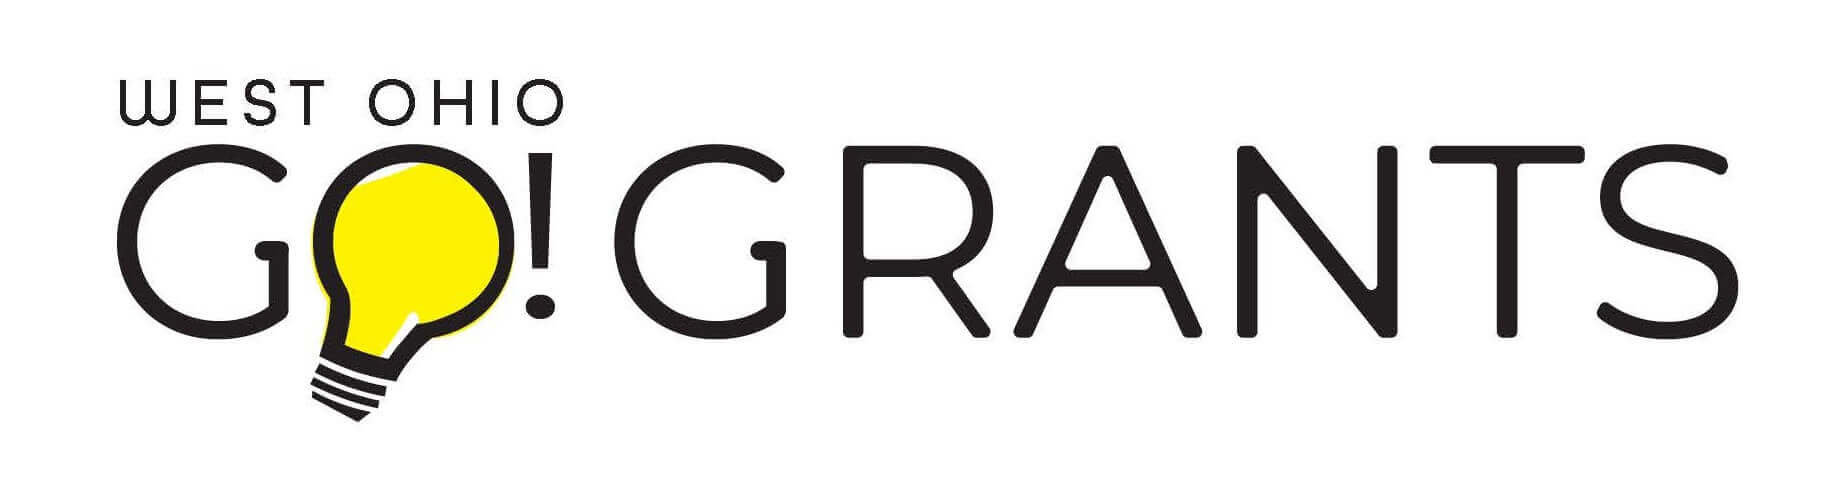 gogrants logo